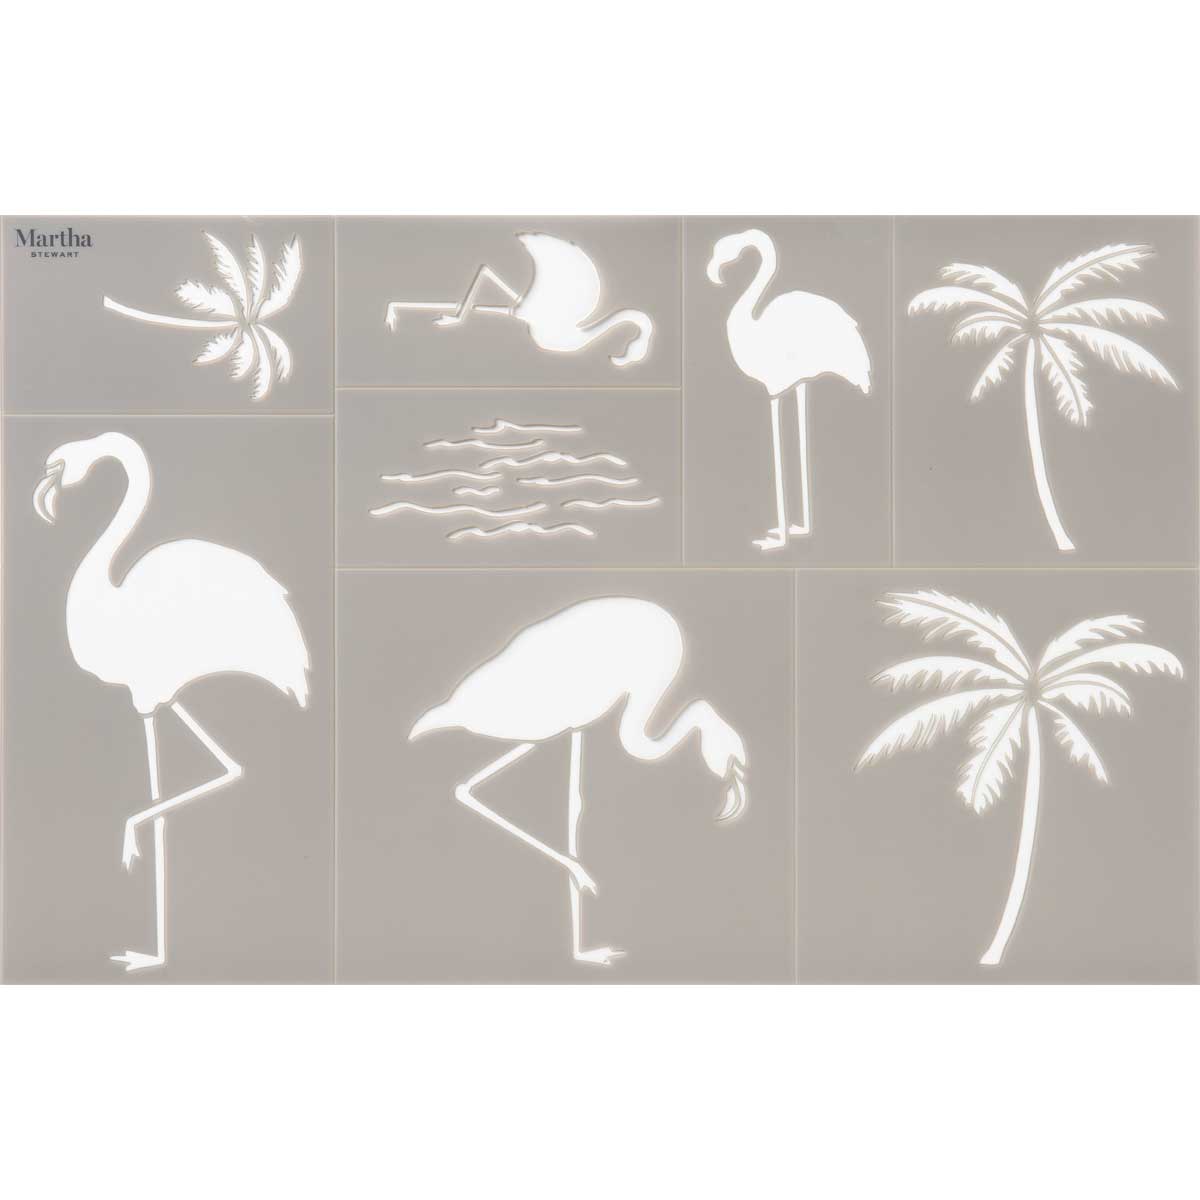 Martha Stewart ® Adhesive Stencil - Flamingo - 17638